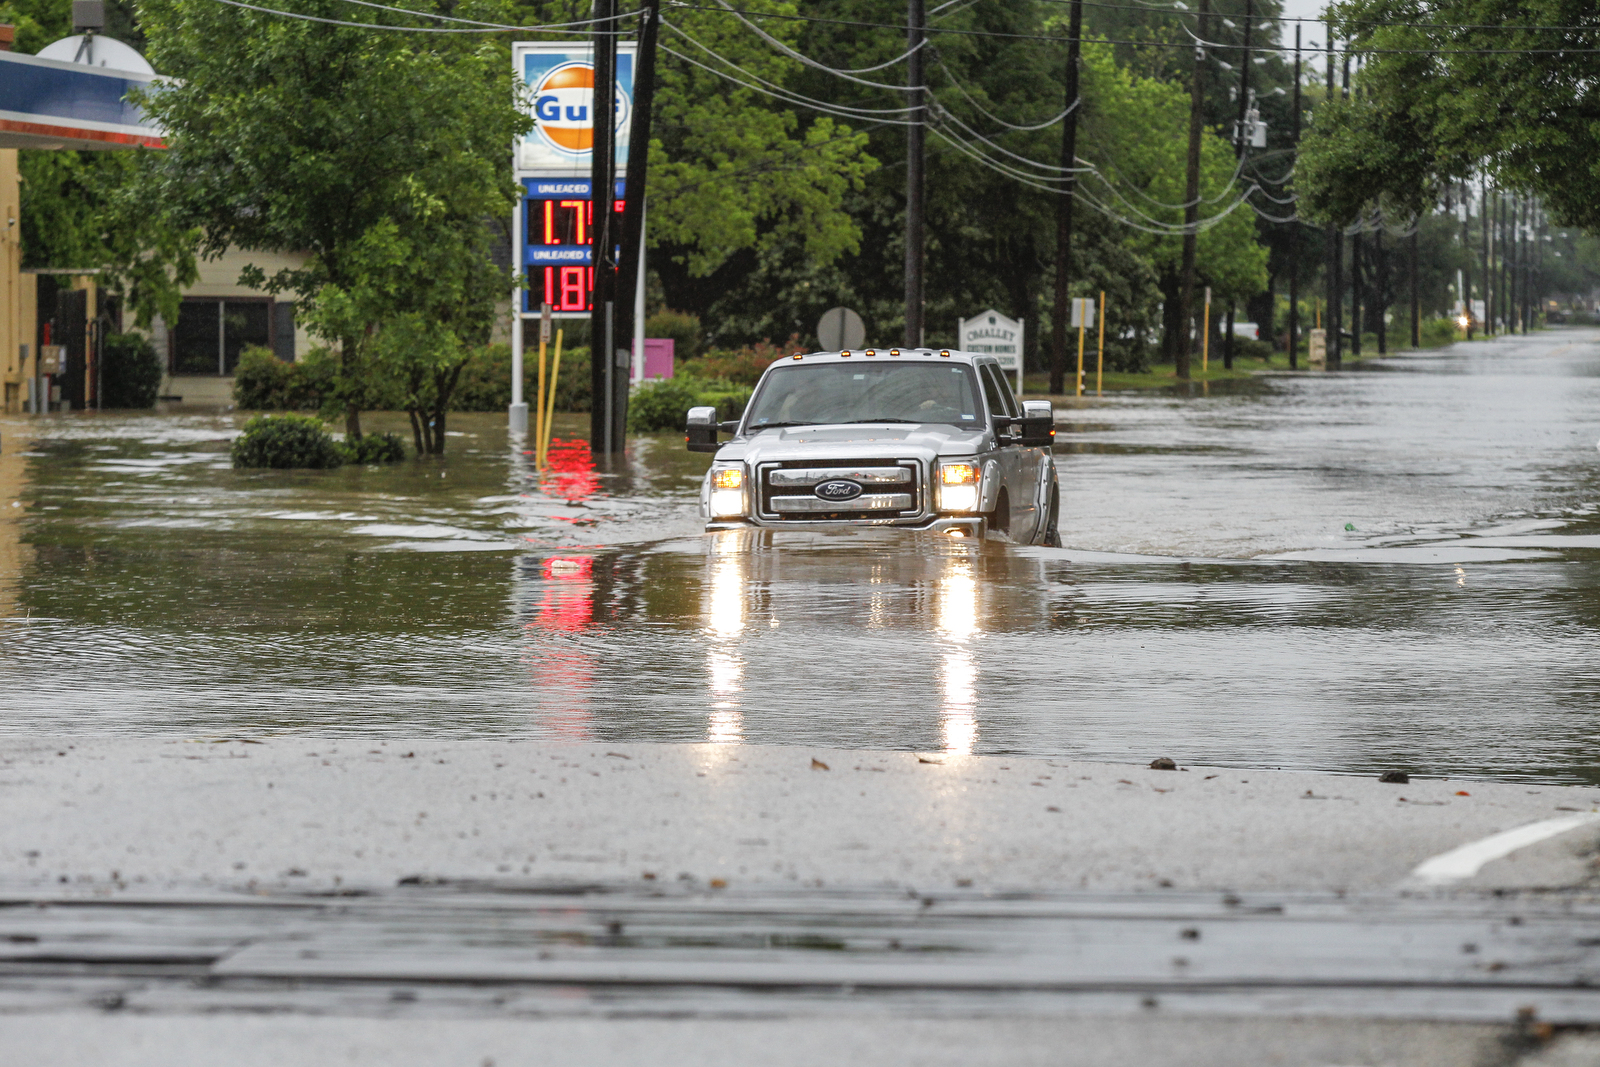 Flood damage varies in greater Katy area - Houston Chronicle1600 x 1067